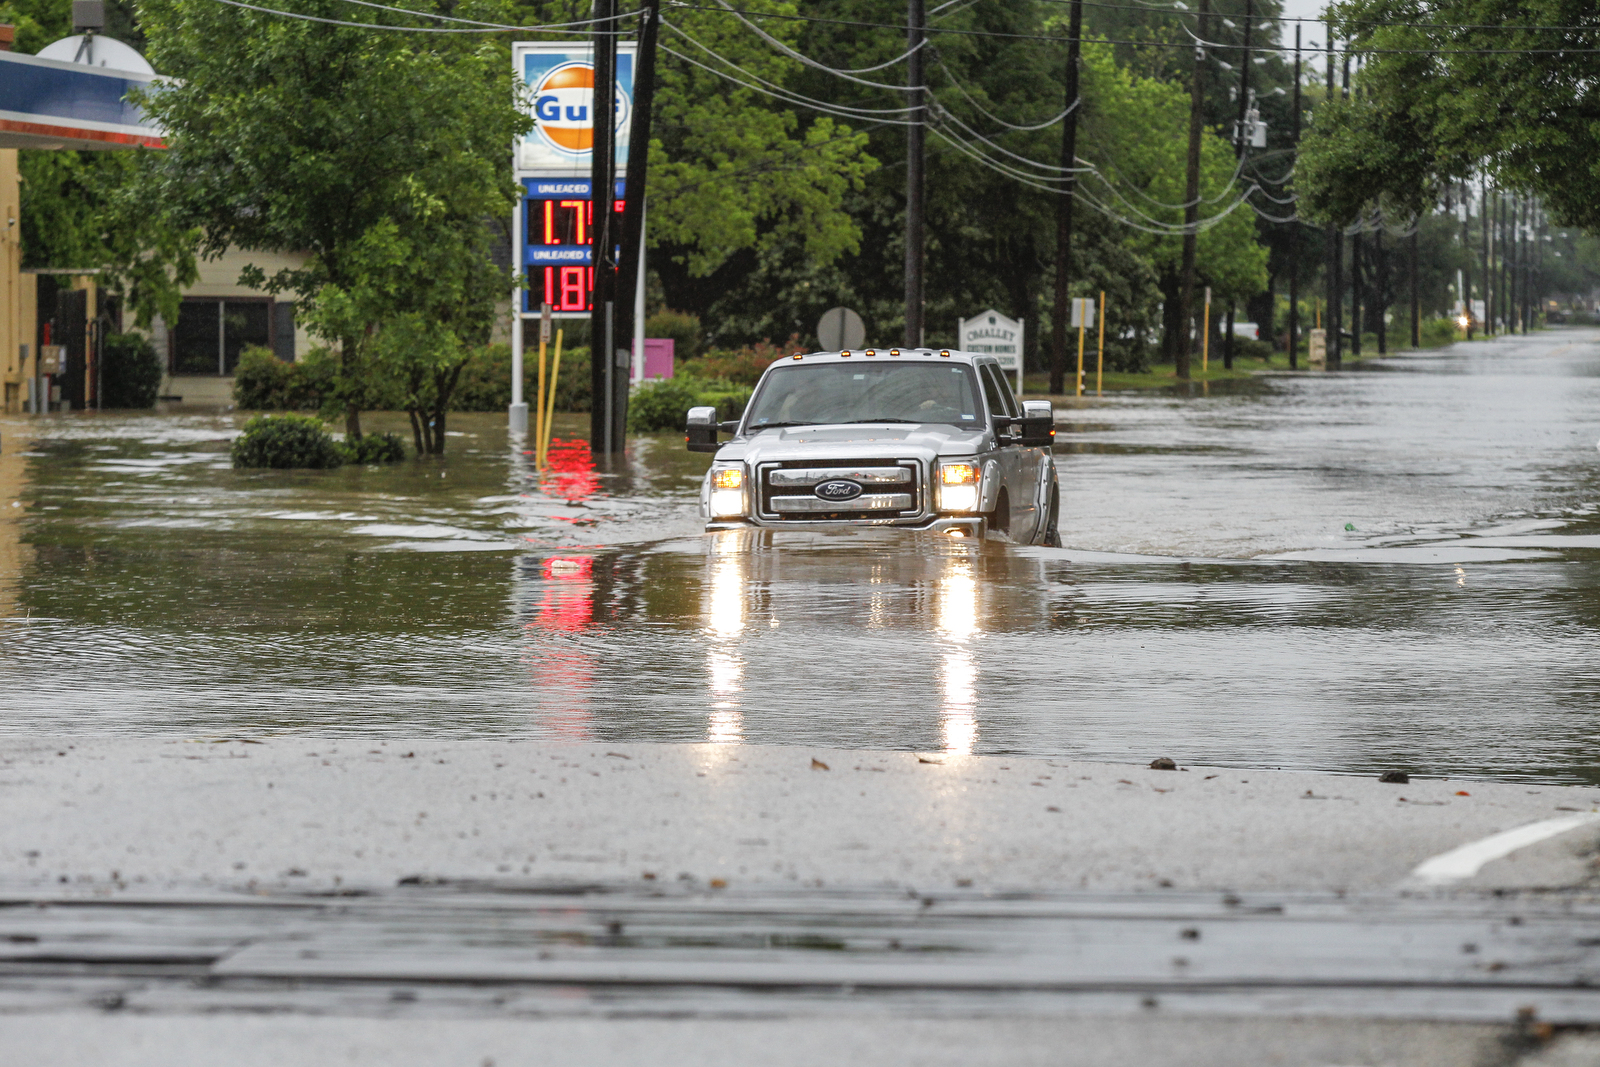 Flood damage varies in greater Katy area - Houston Chronicle1600 x 1067